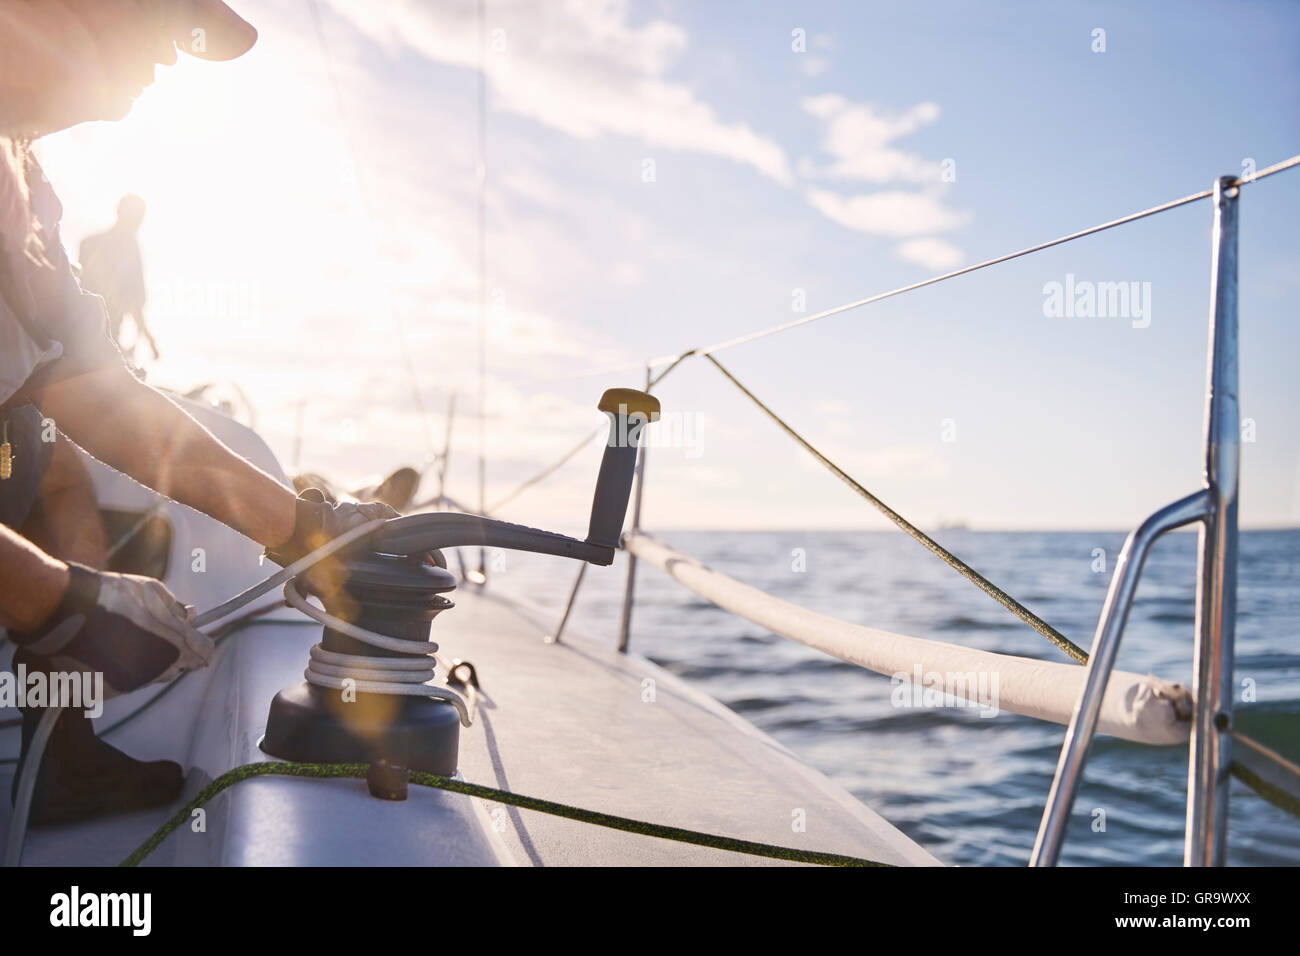 Man adjusting sailing winch on sailboat Stock Photo